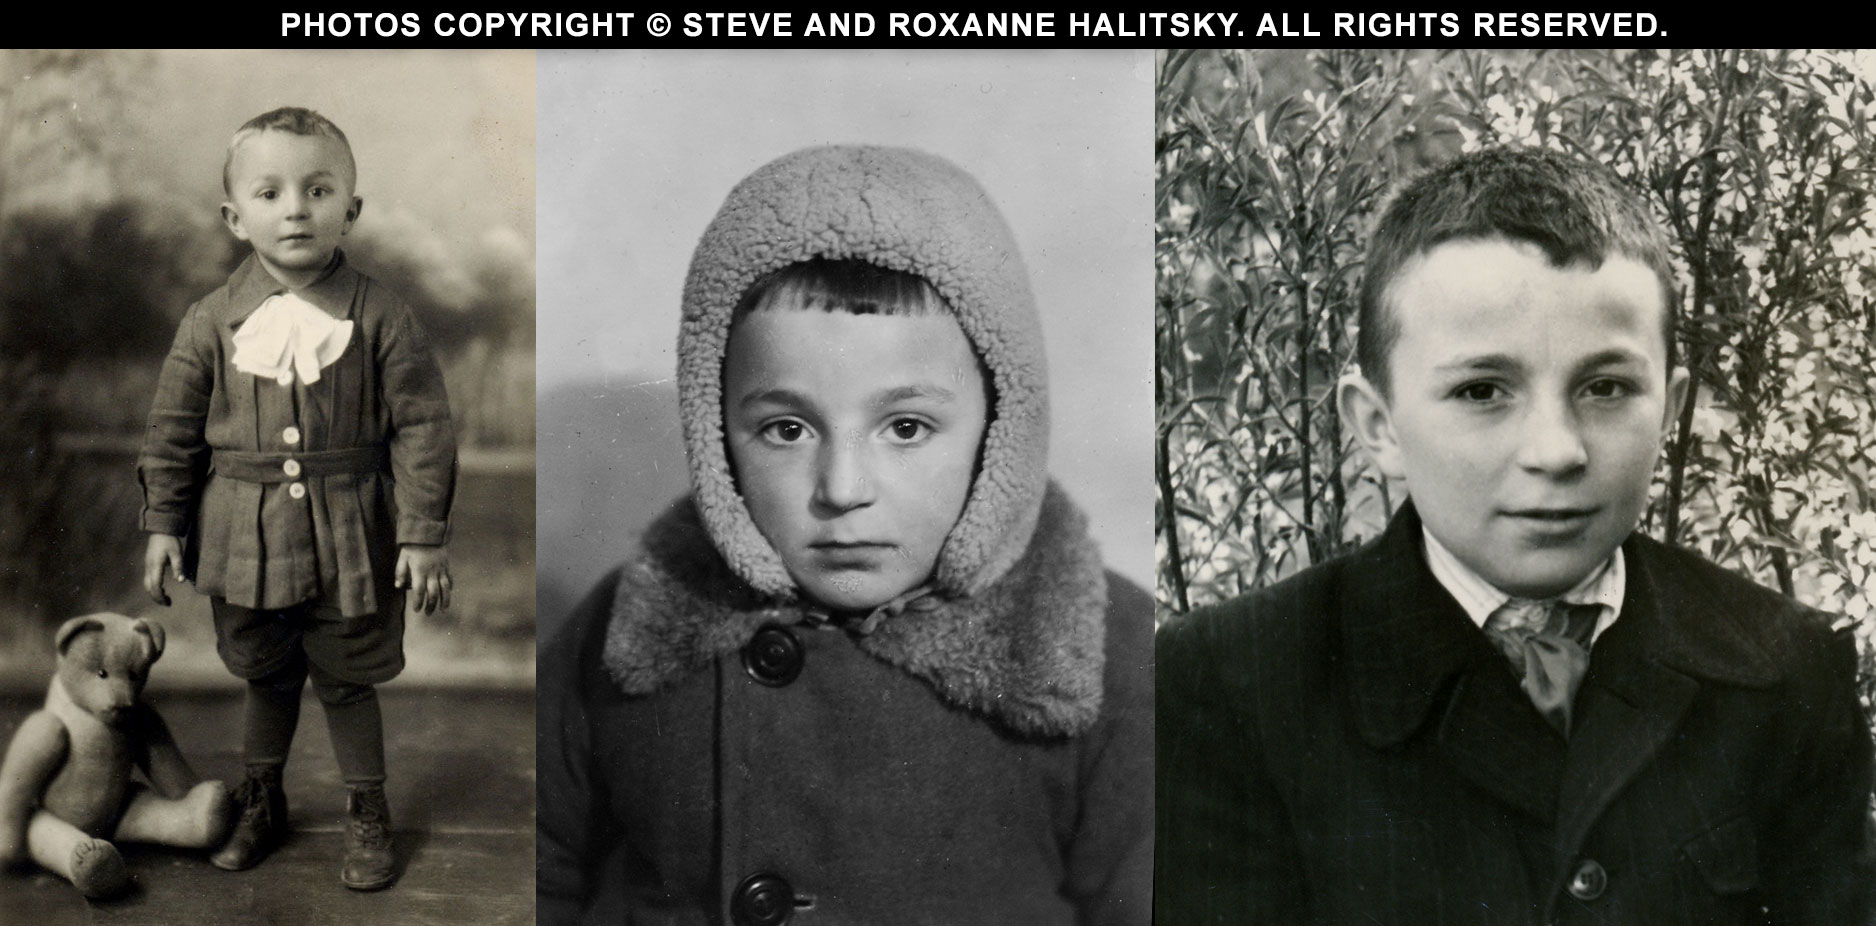 Steve  Halitsky at 3 years old (1946), 5 years old (1948), 12 years old (1955)